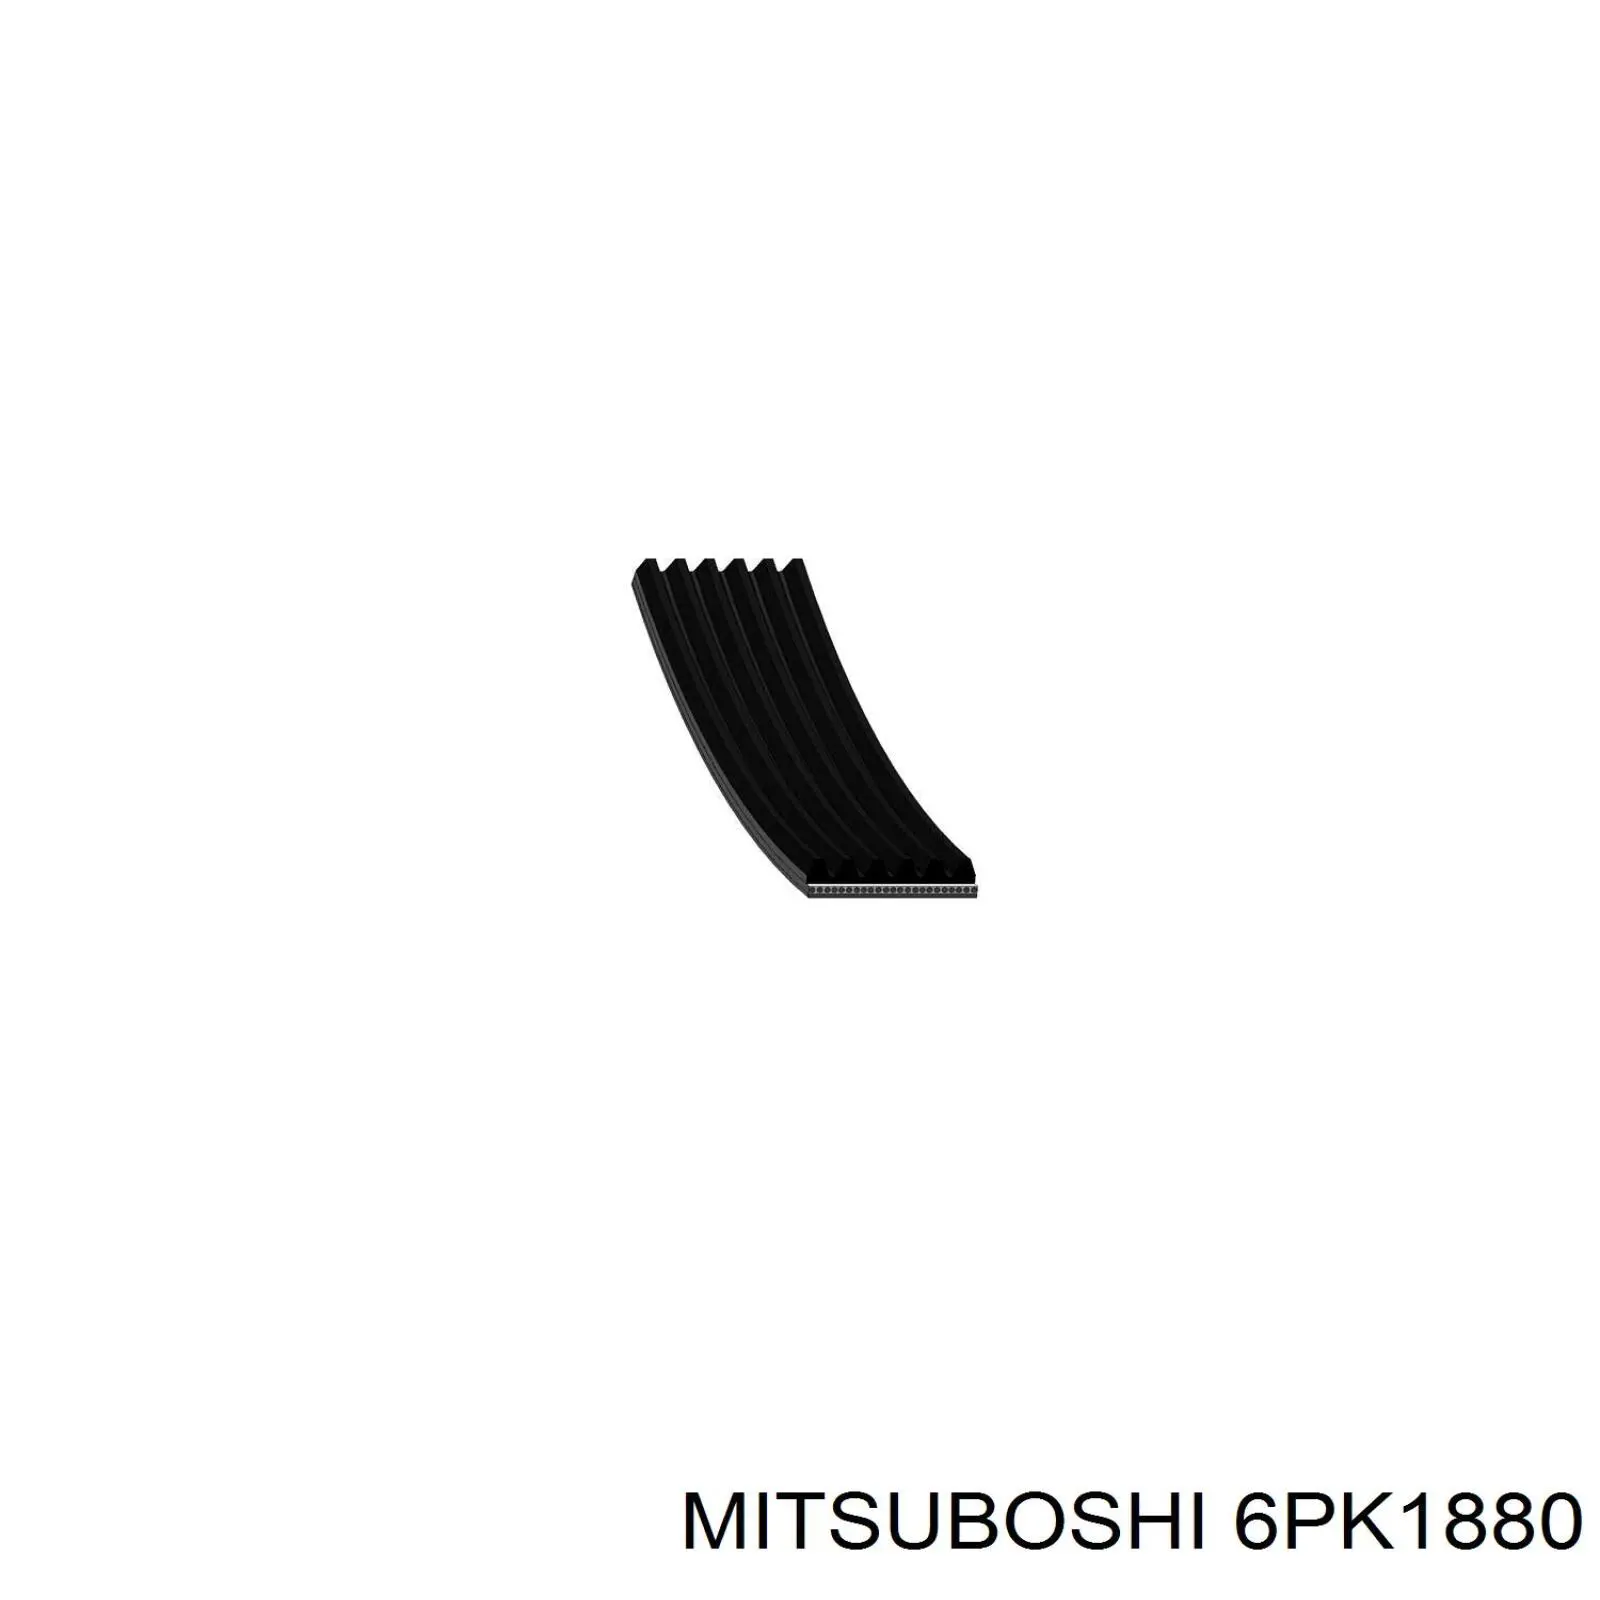 6PK1880 Mitsuboshi correa trapezoidal